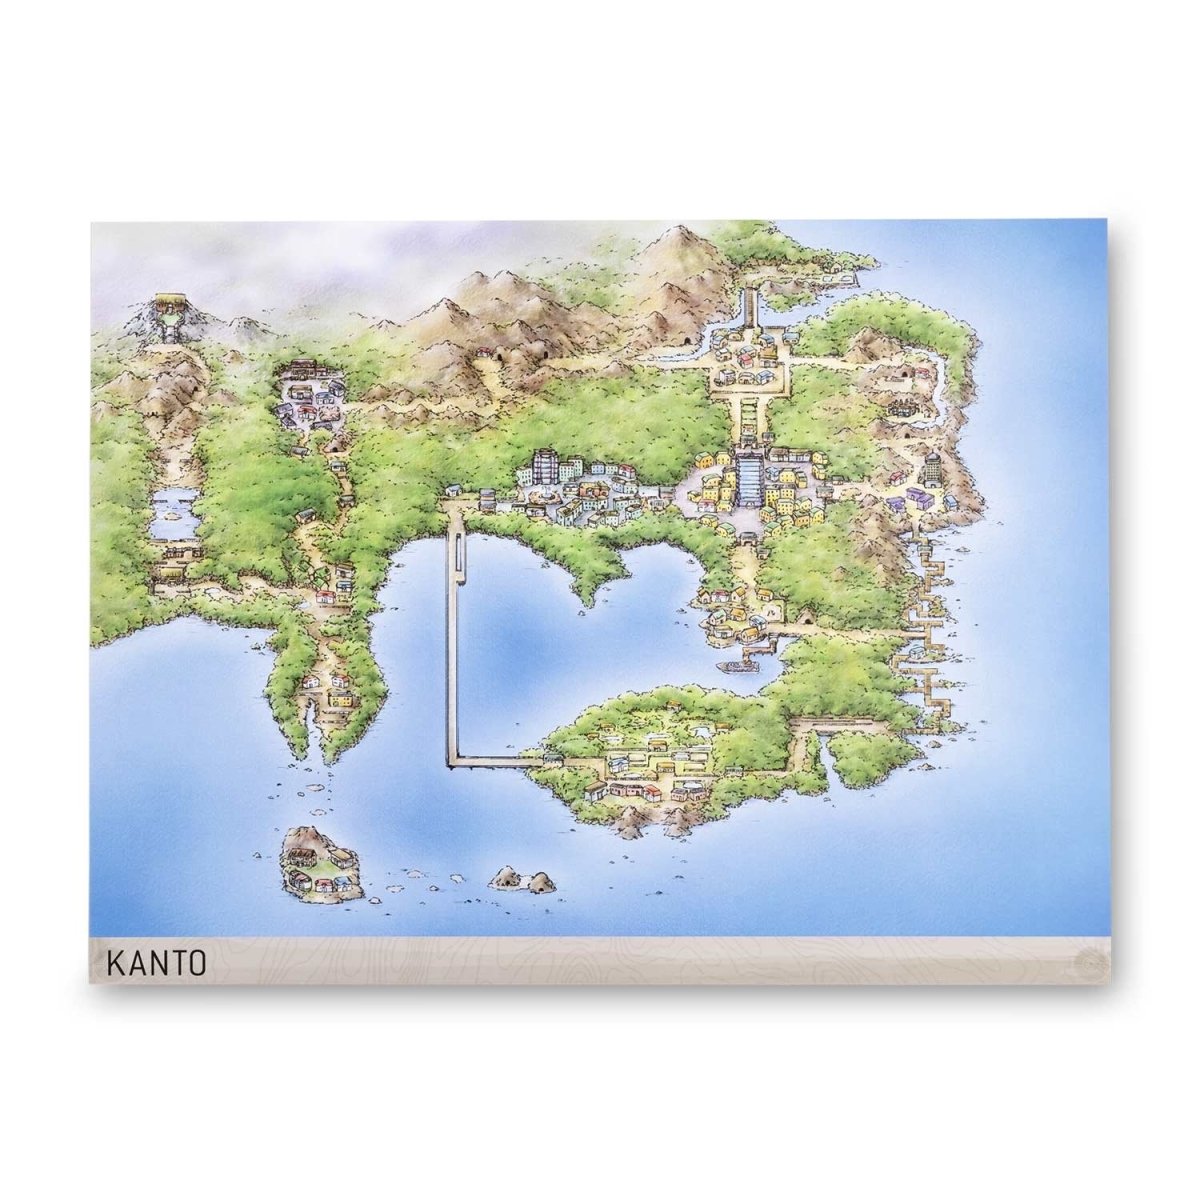 welzijn Immoraliteit spreiding Kanto Pokémon Region Maps Poster | Pokémon Center Official Site